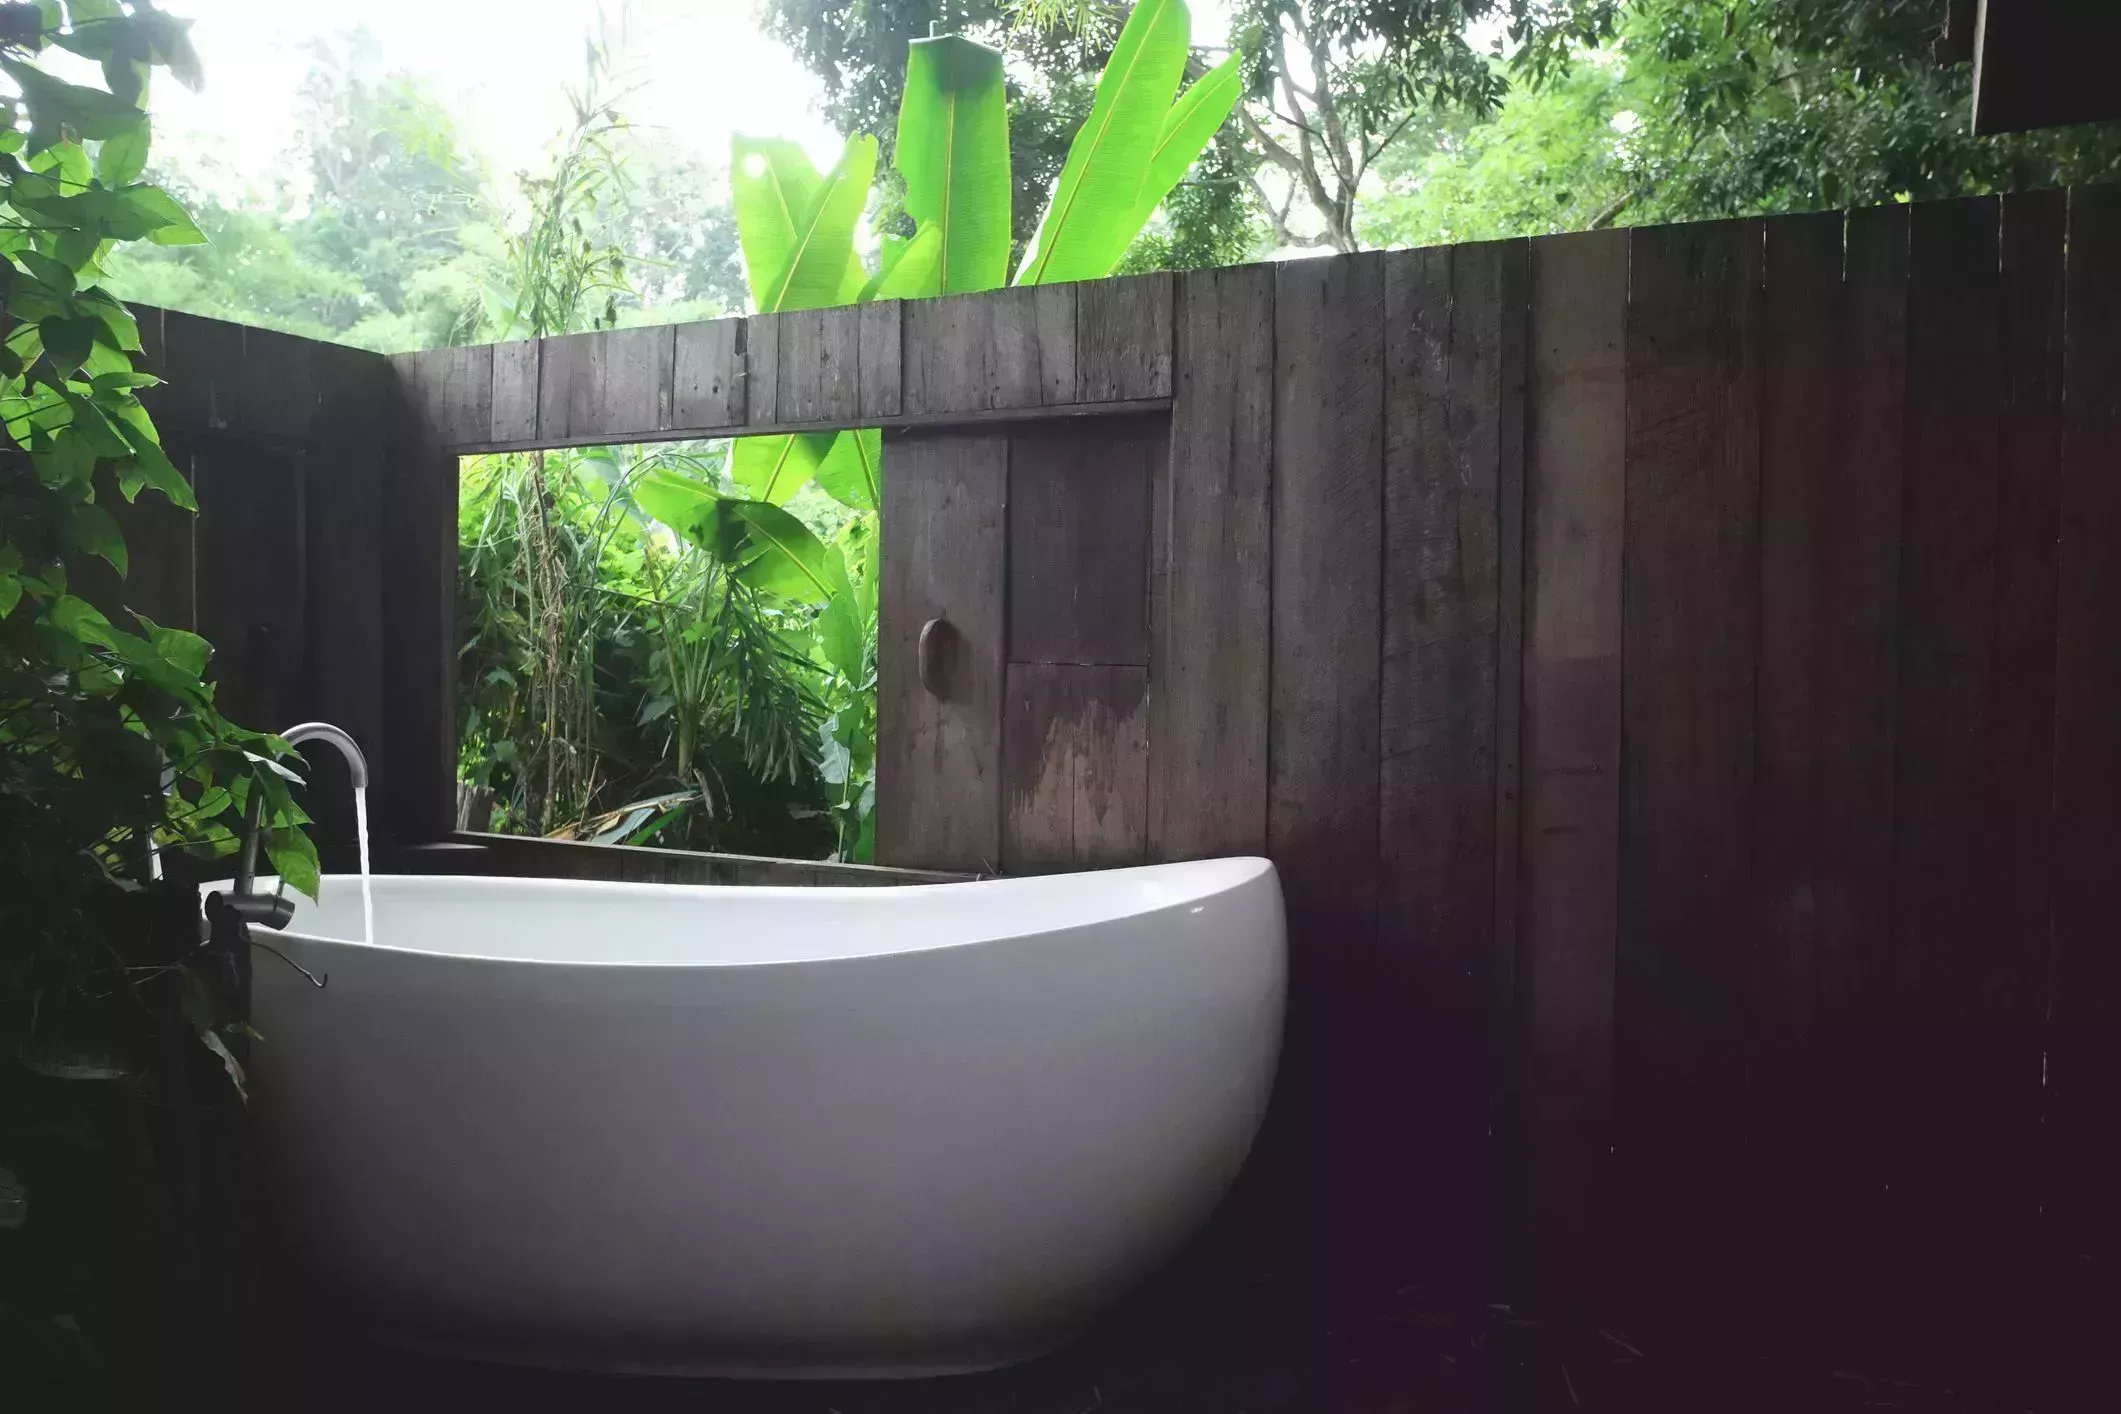 outdoor tub ideas, white bathtub in outdoor bath